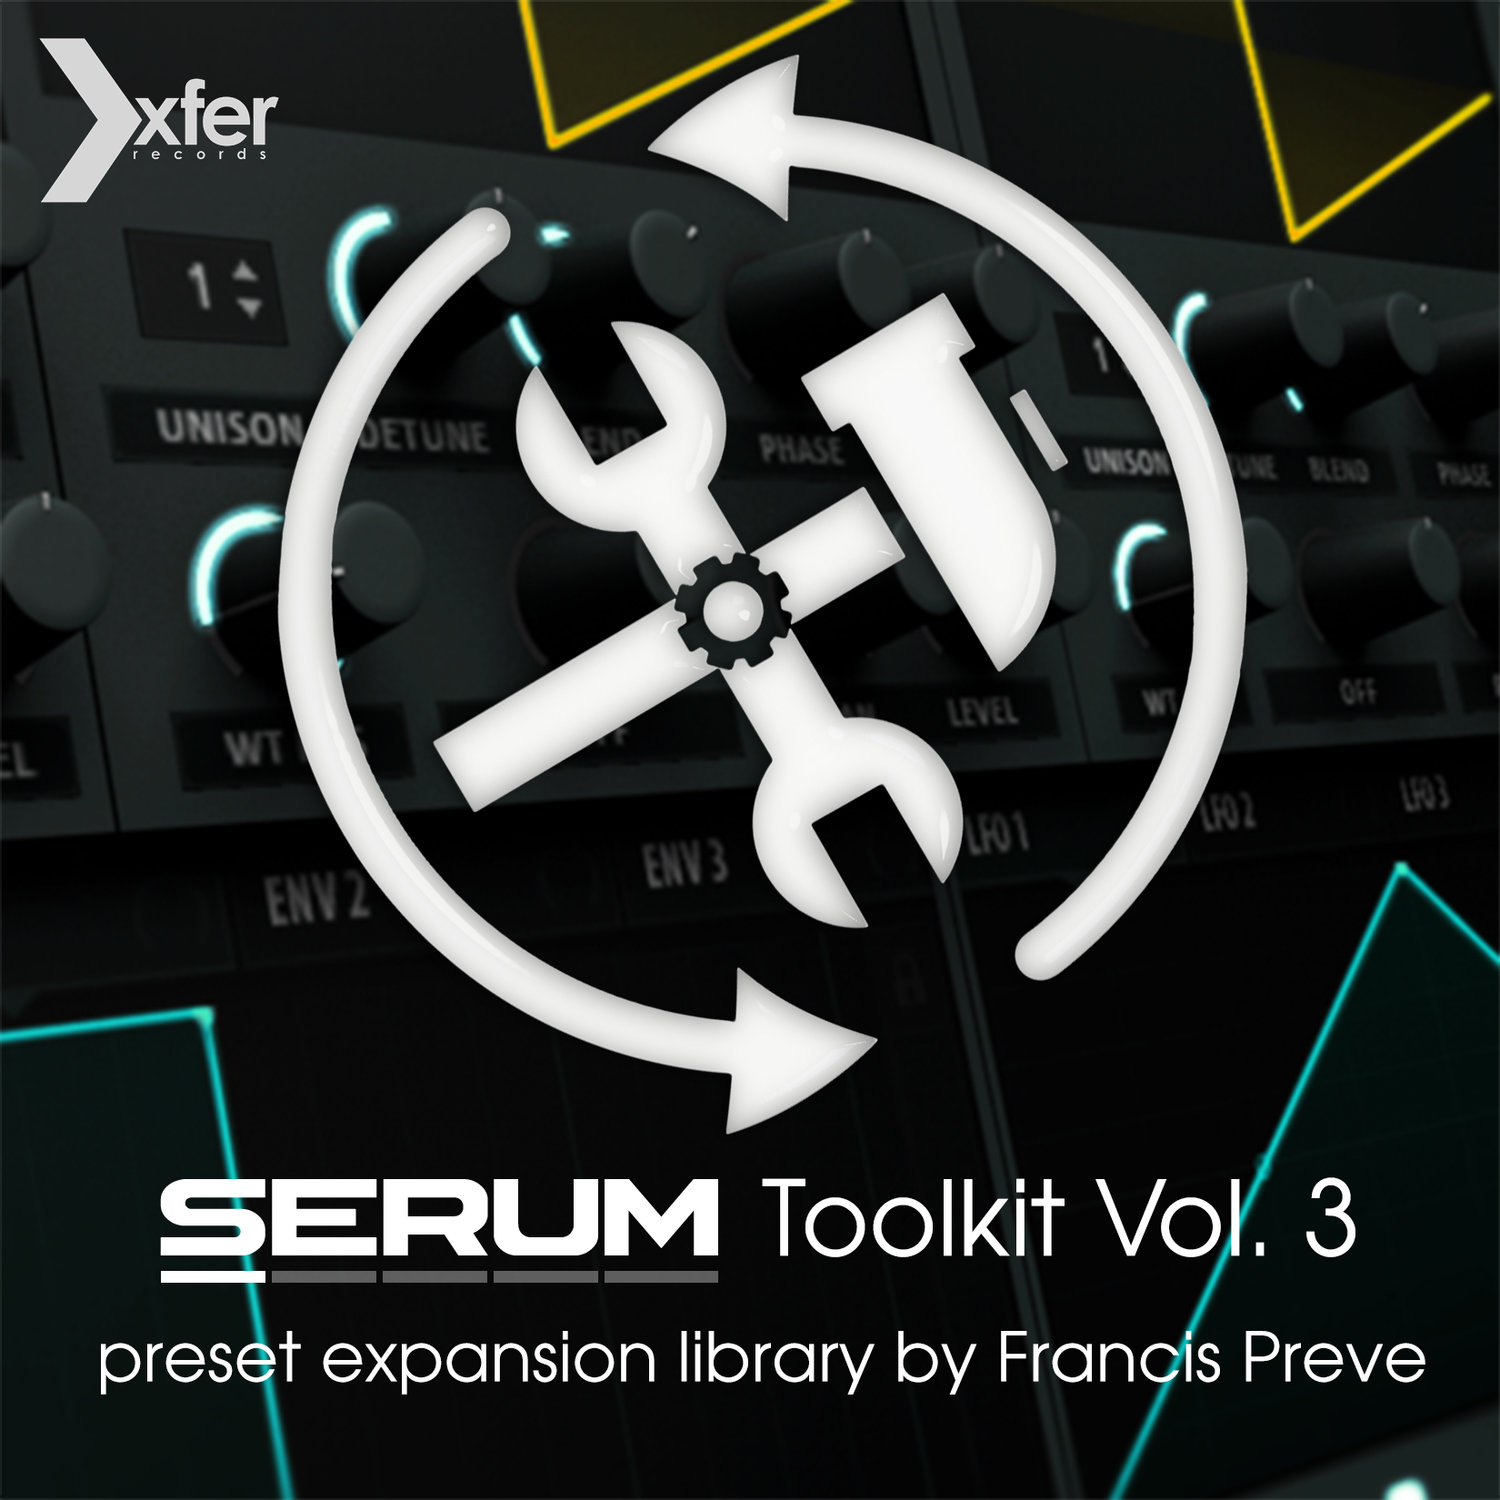 Xfer records serum 1.11b3 download torrent